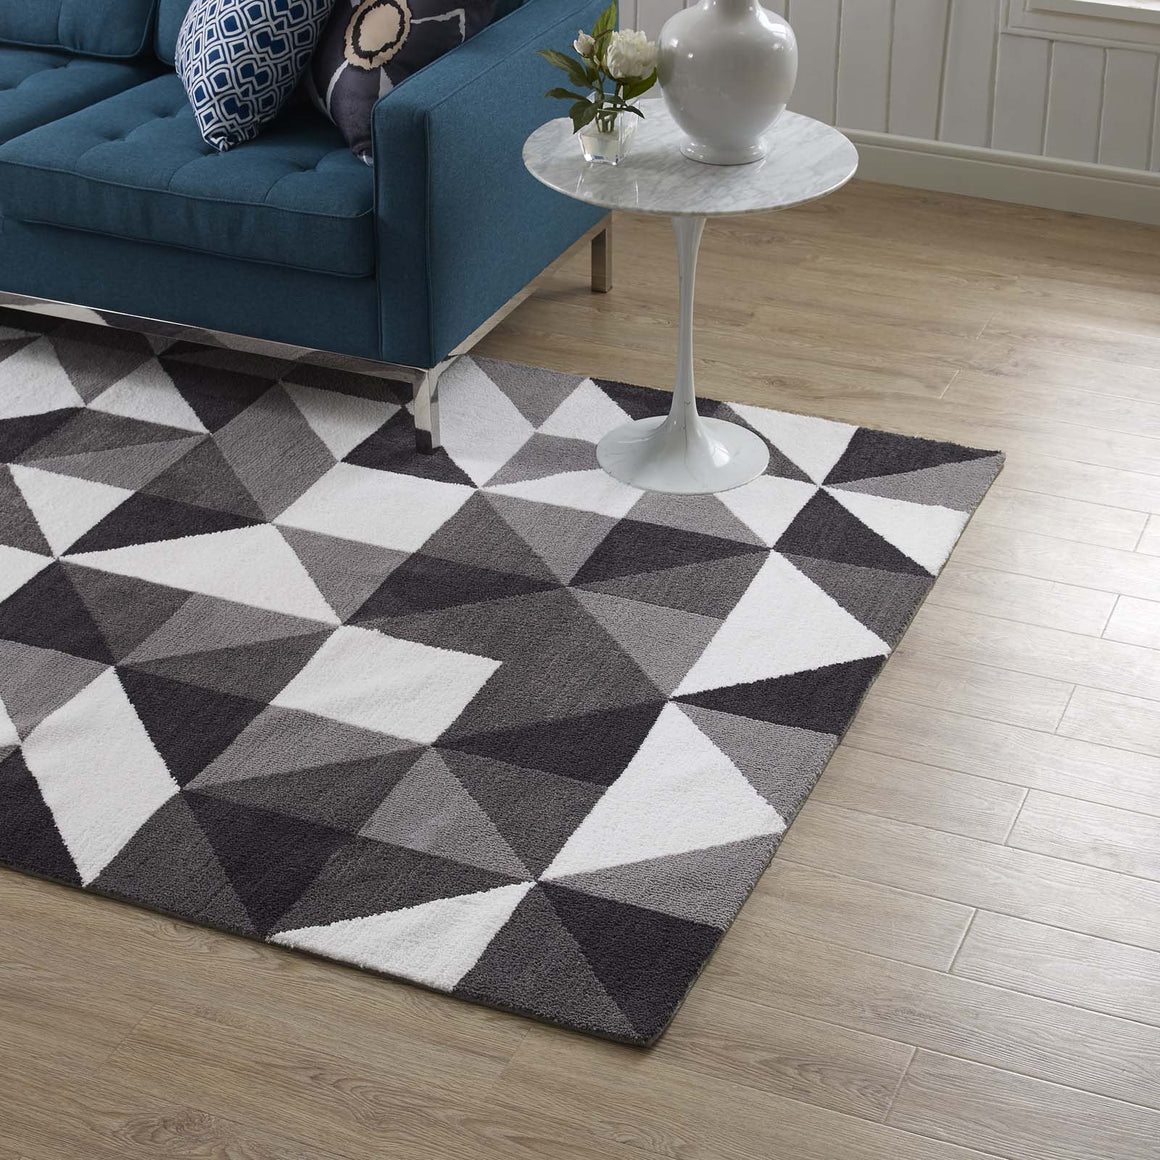 Kahula Geometric Triangle Mosaic 5x8 Area Rug Black, Gray and White